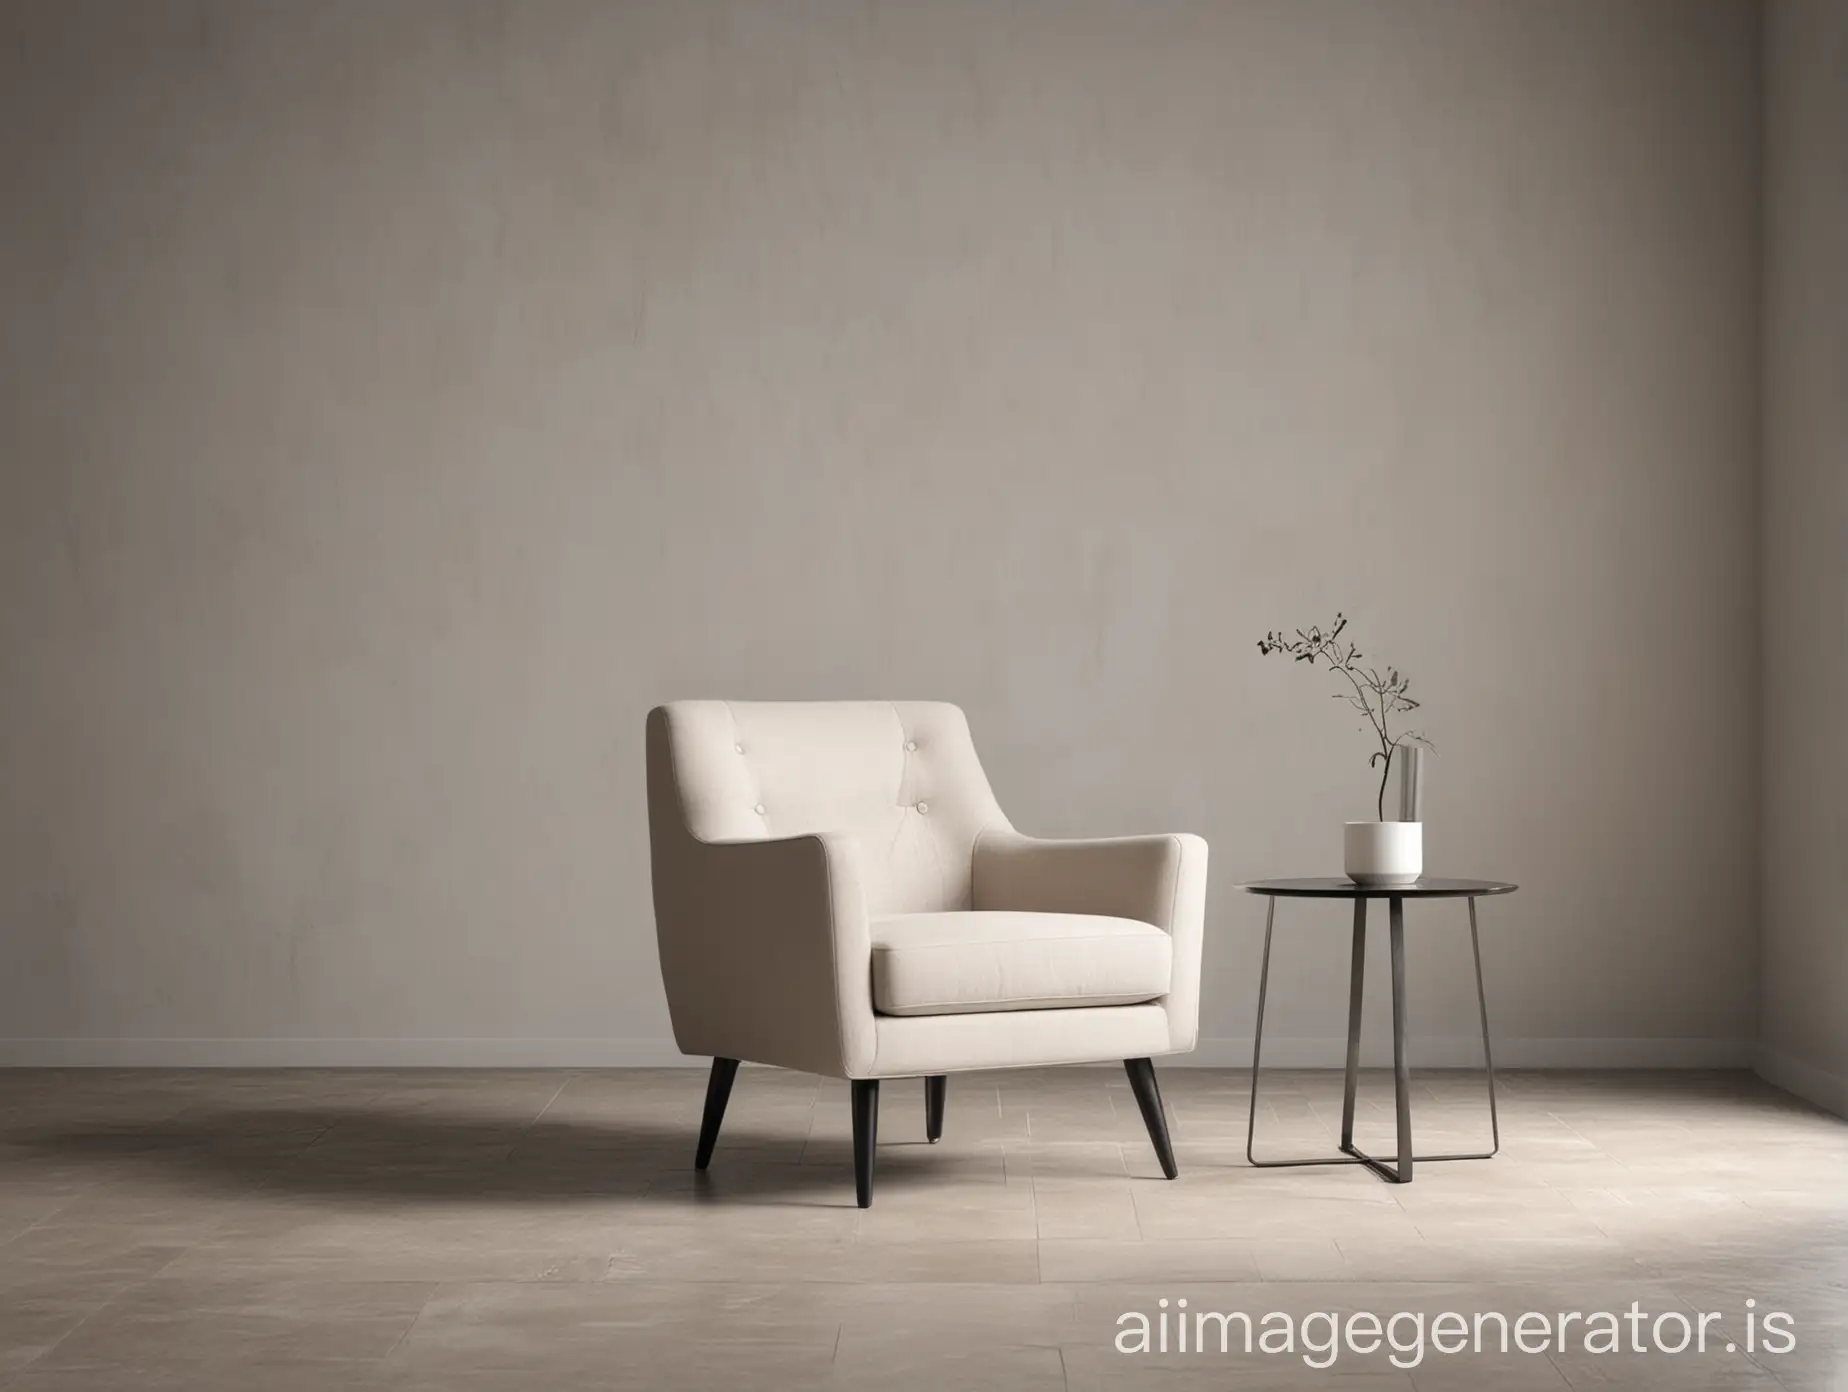 Minimalistic-Aesthetic-Modern-Armchair-in-an-Empty-Room